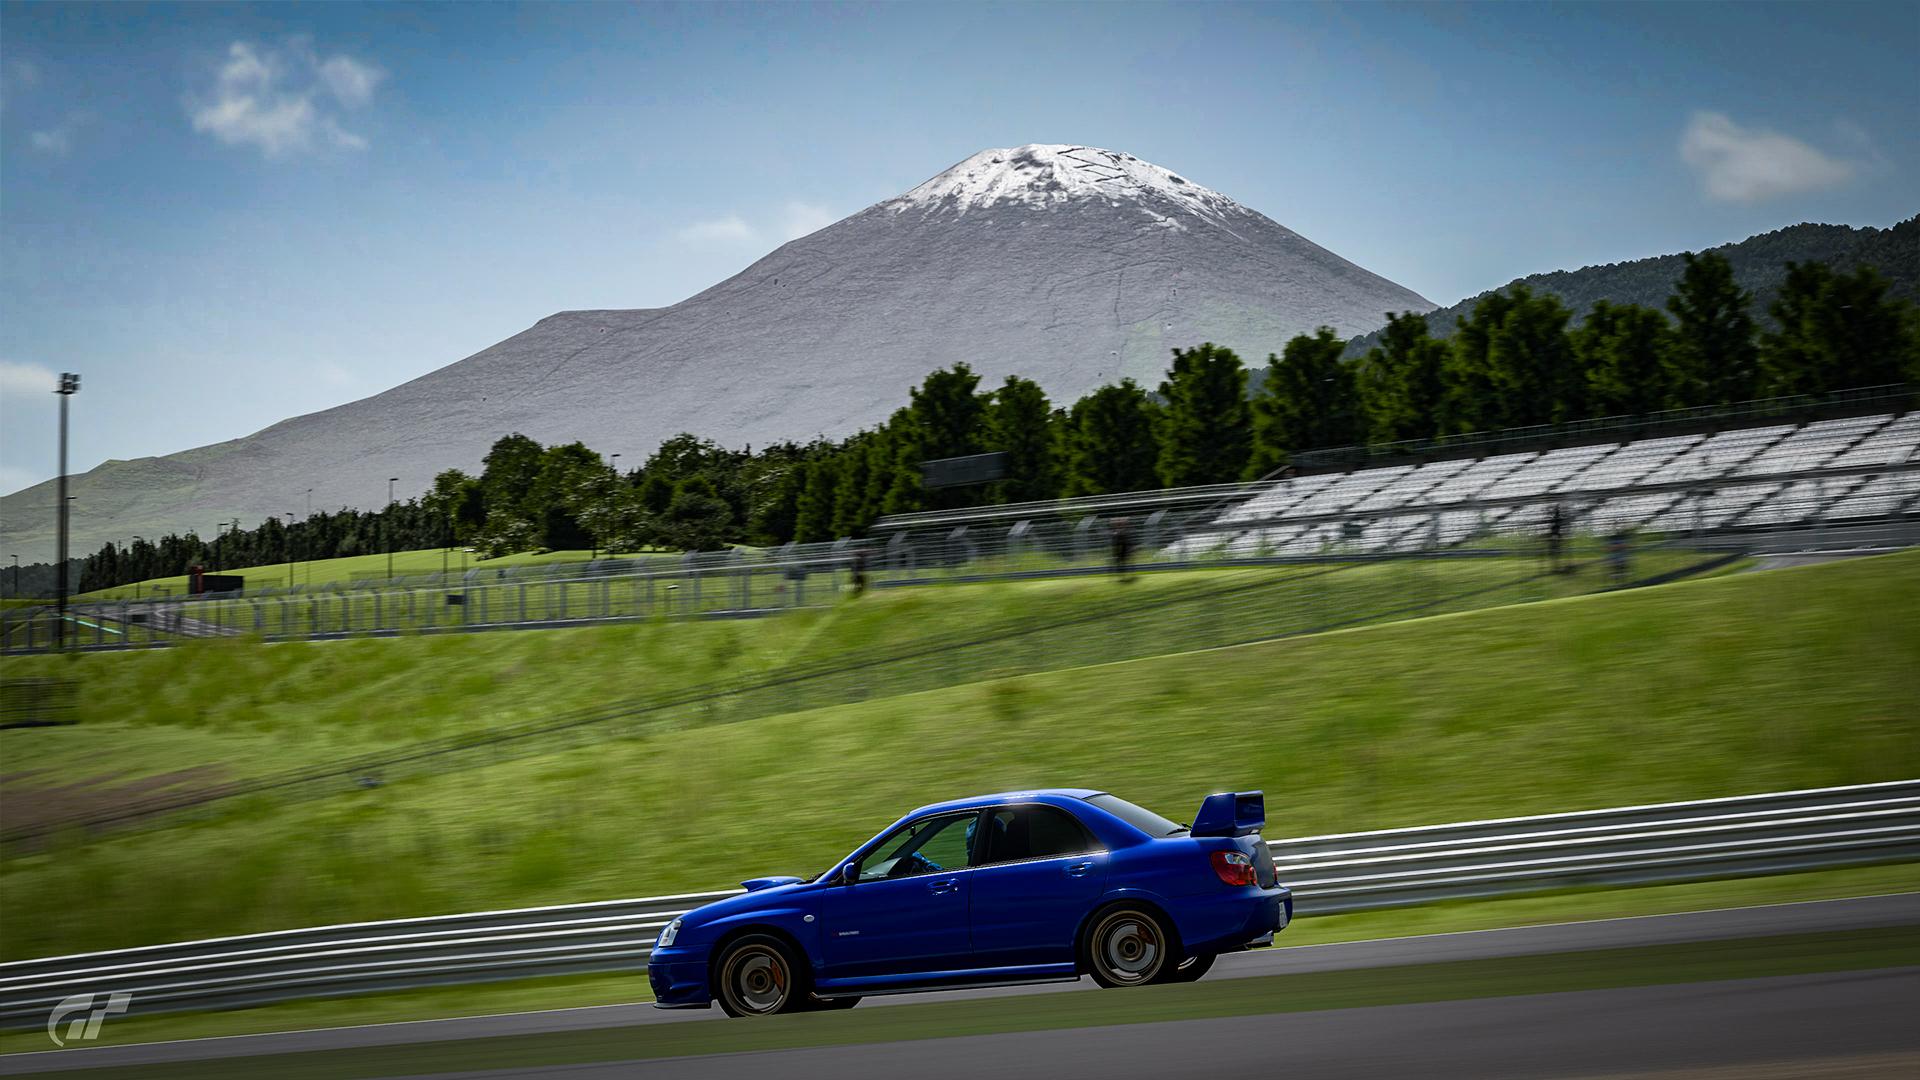 Gran Turismo 3 vs Gran Turismo 4, Subaru Impreza Rally Car